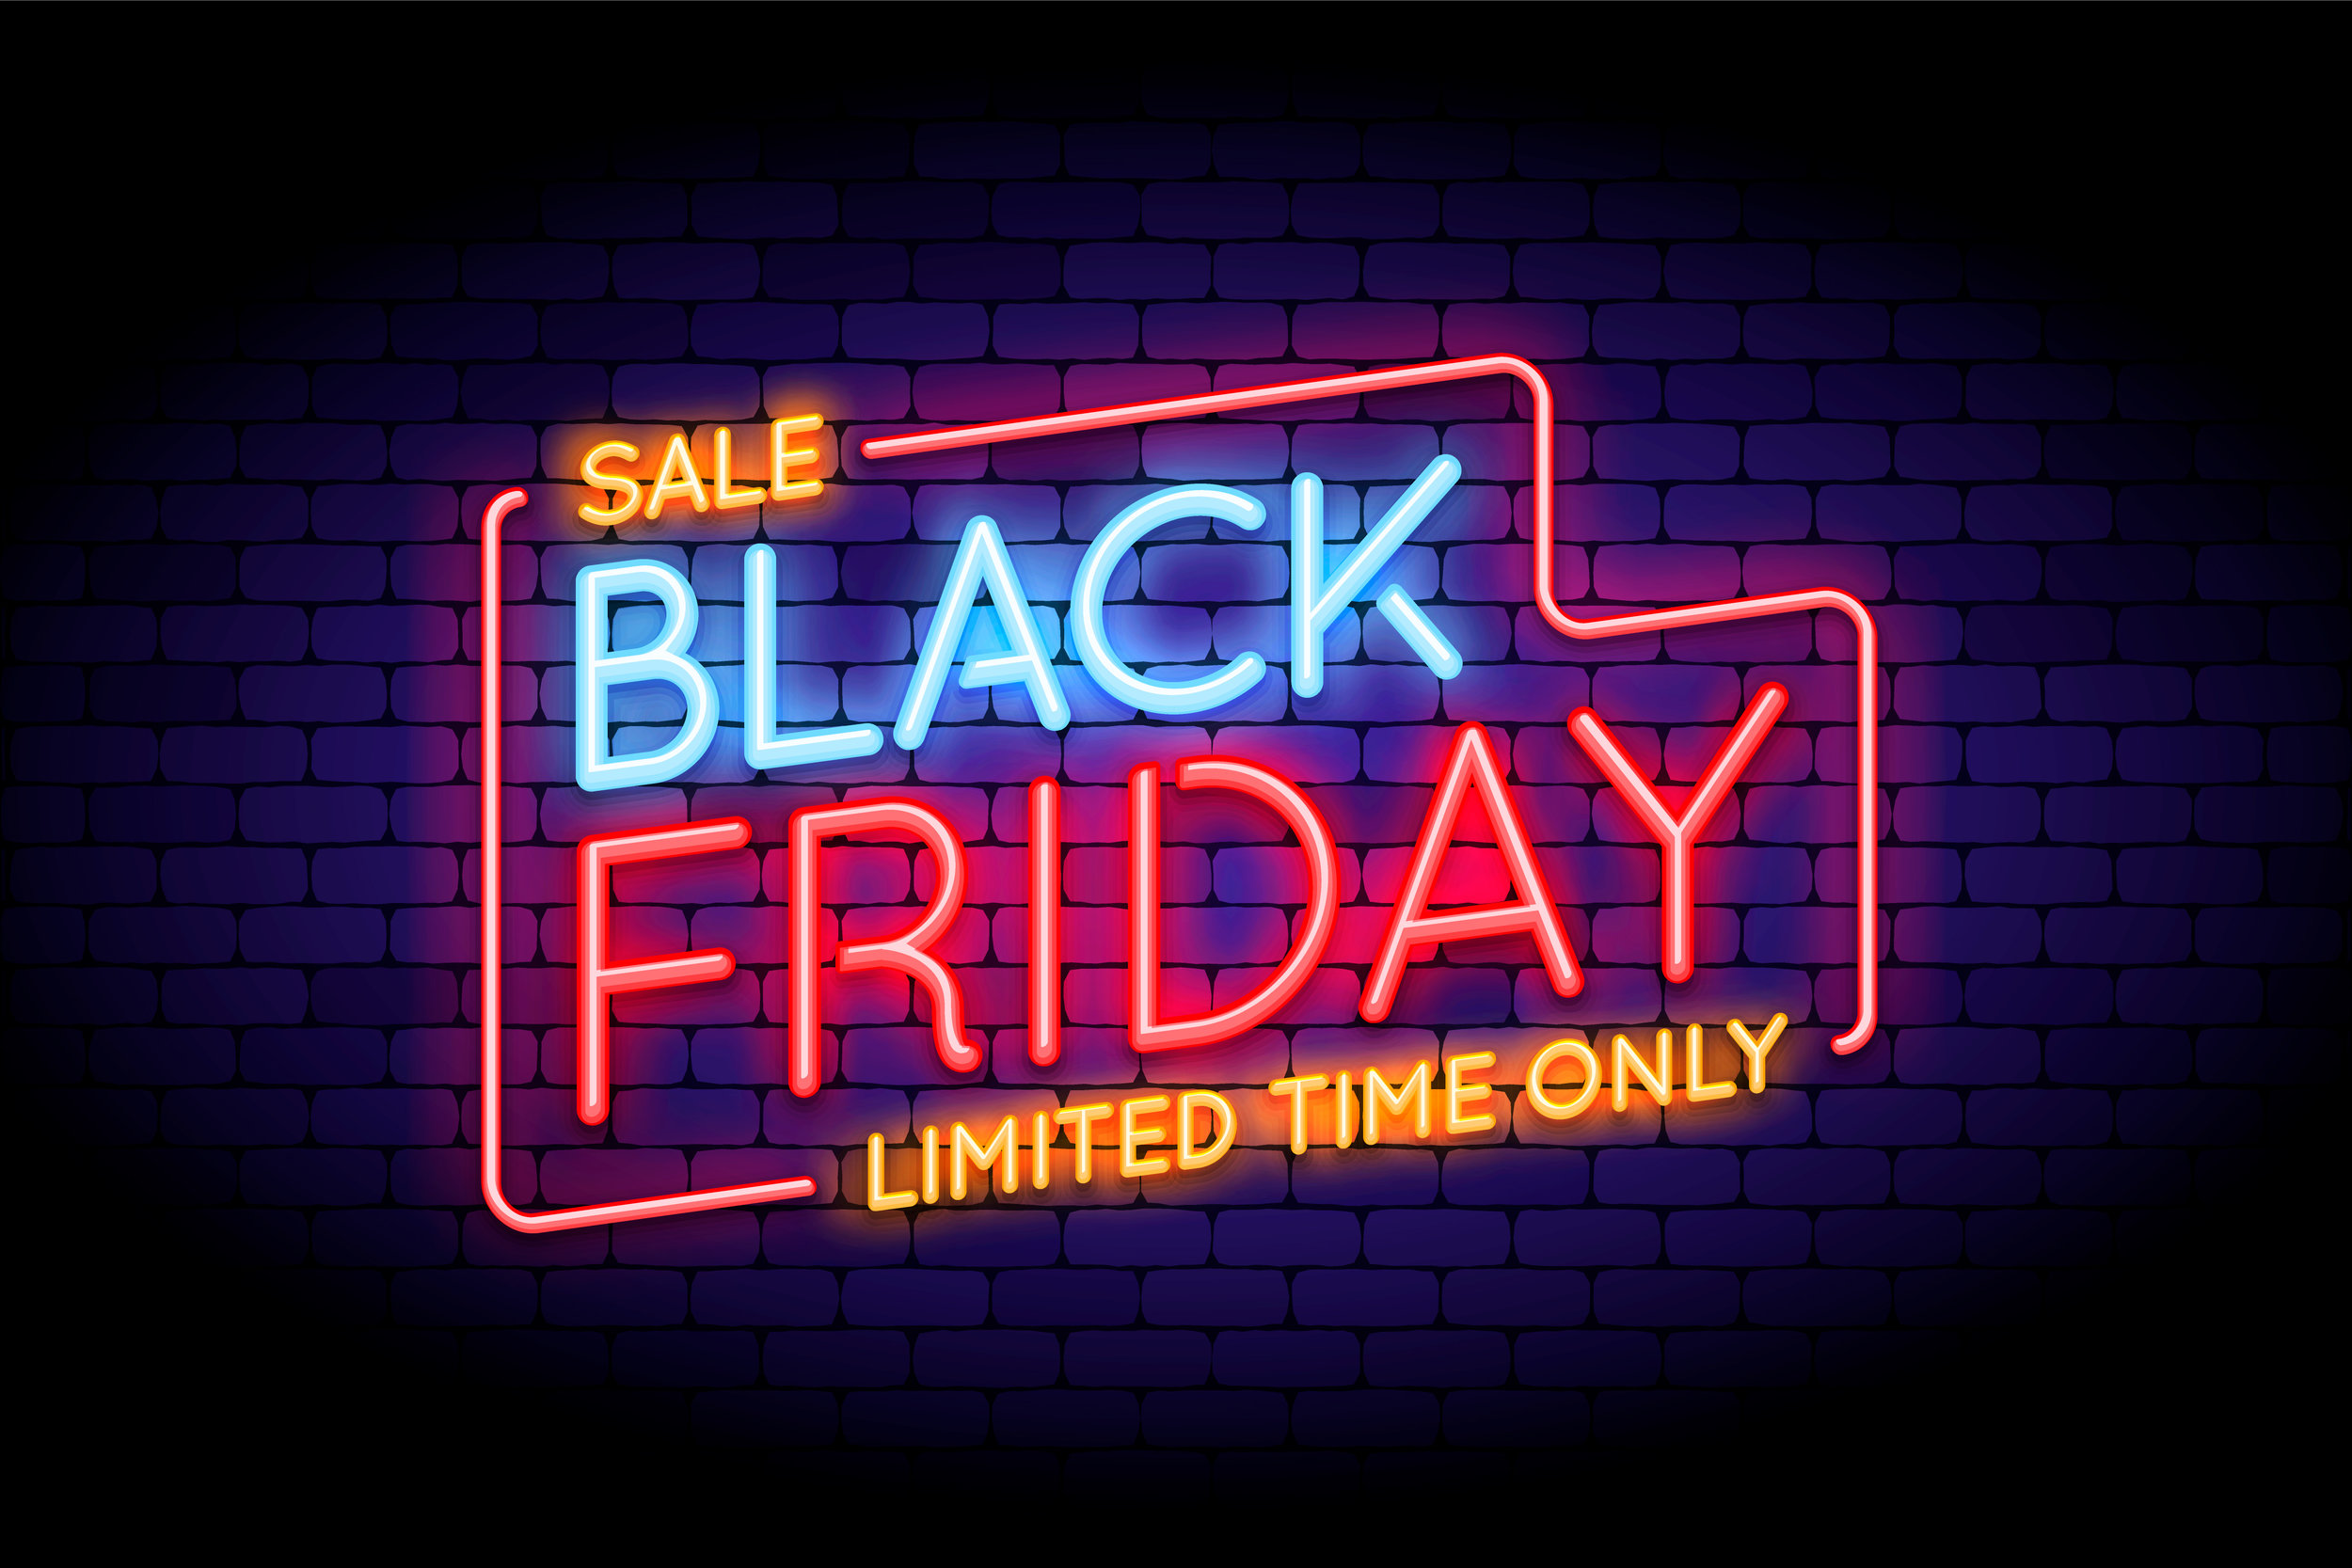 Online vs. In-store Black Friday Deals